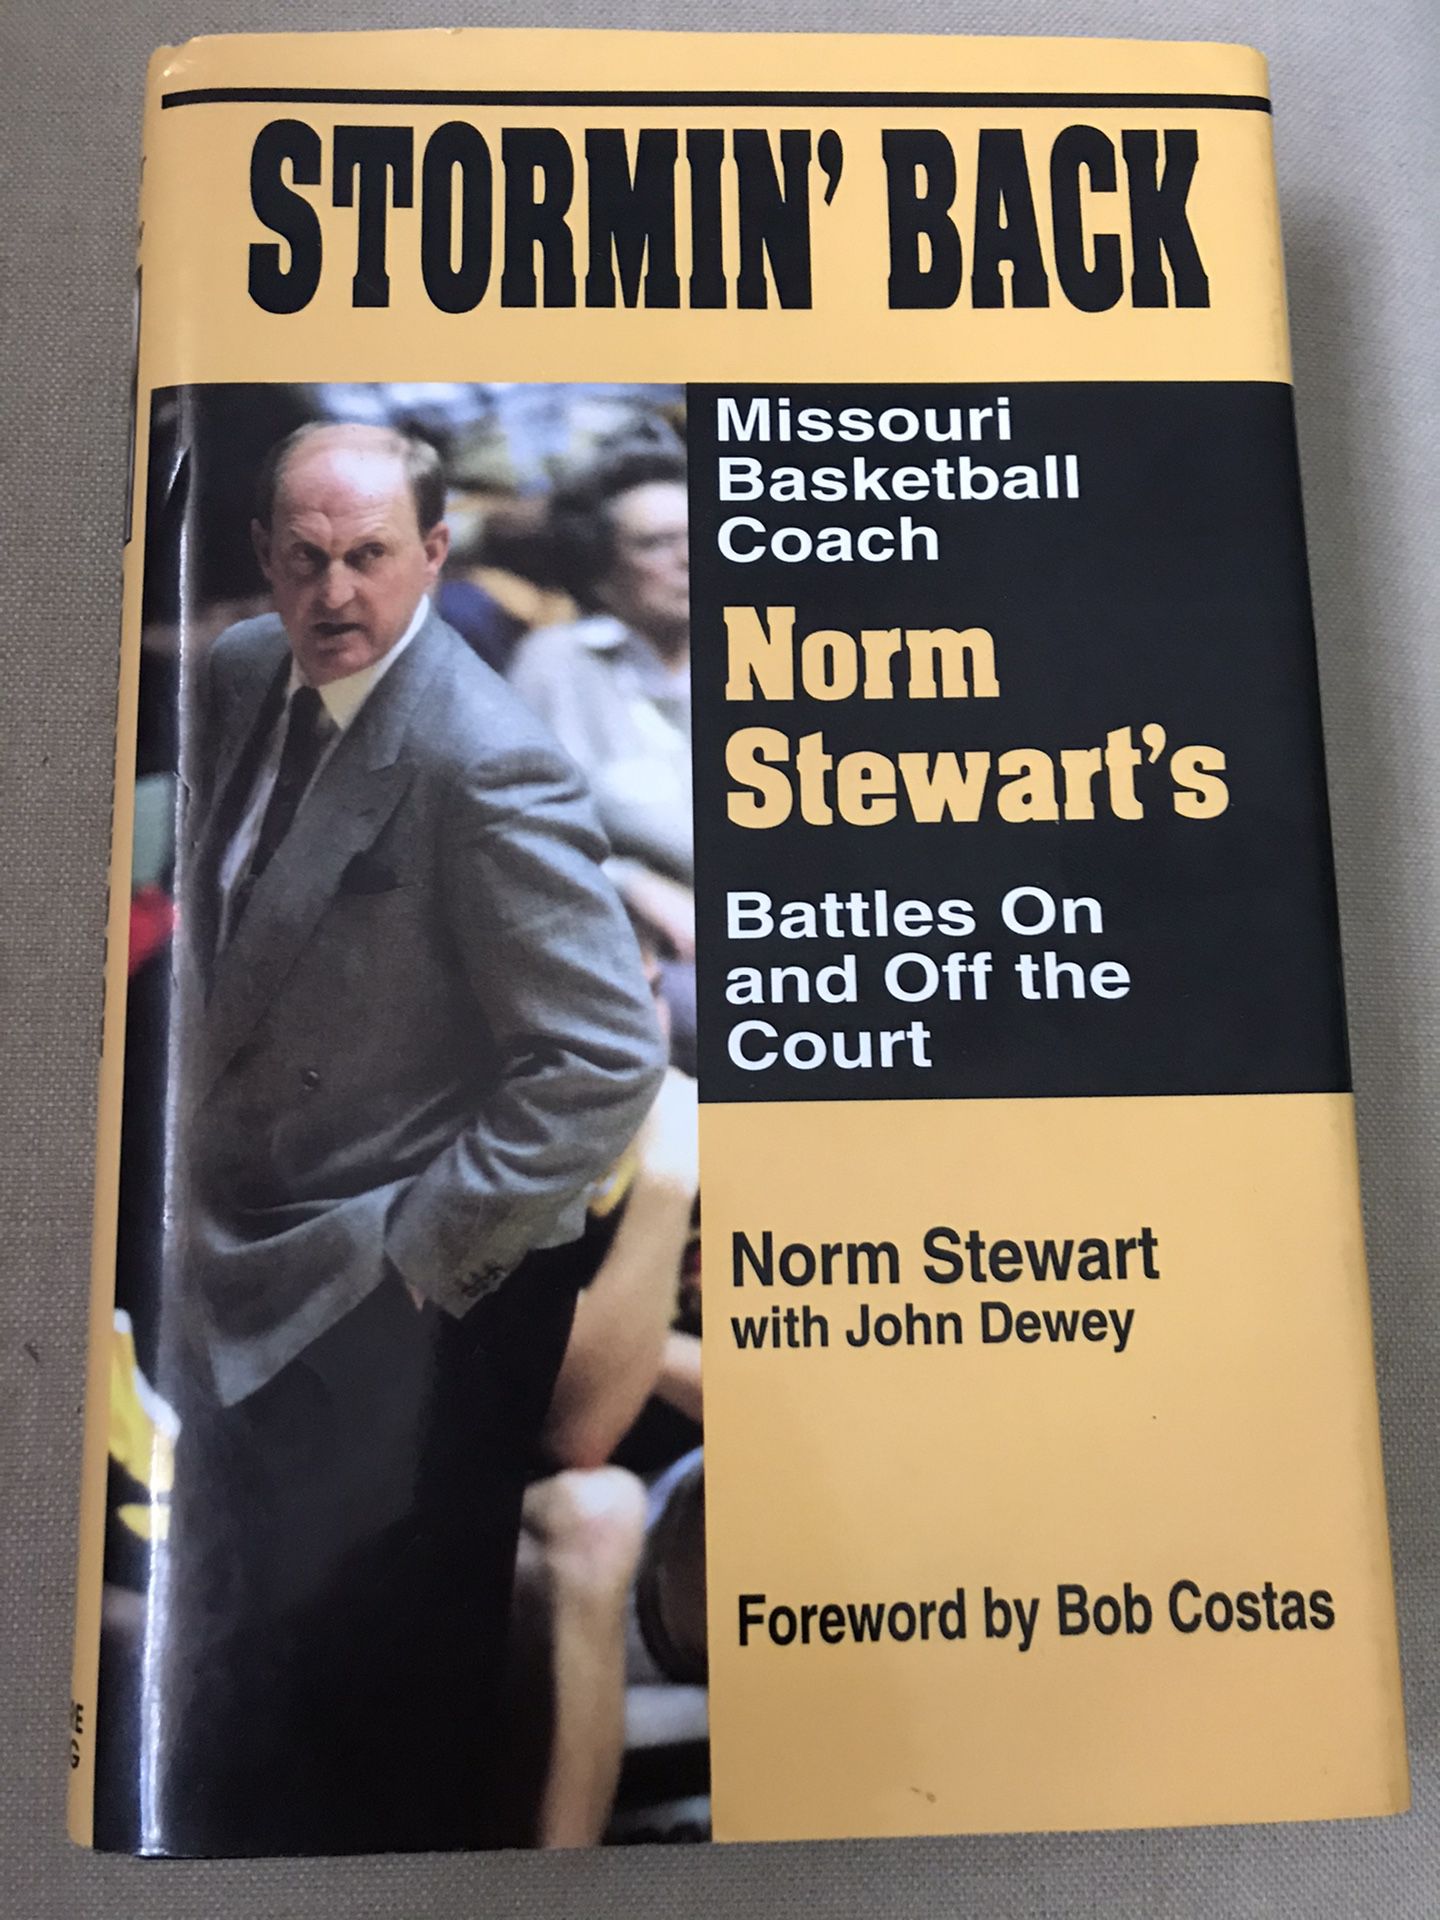 Stormin back norm Stewart book